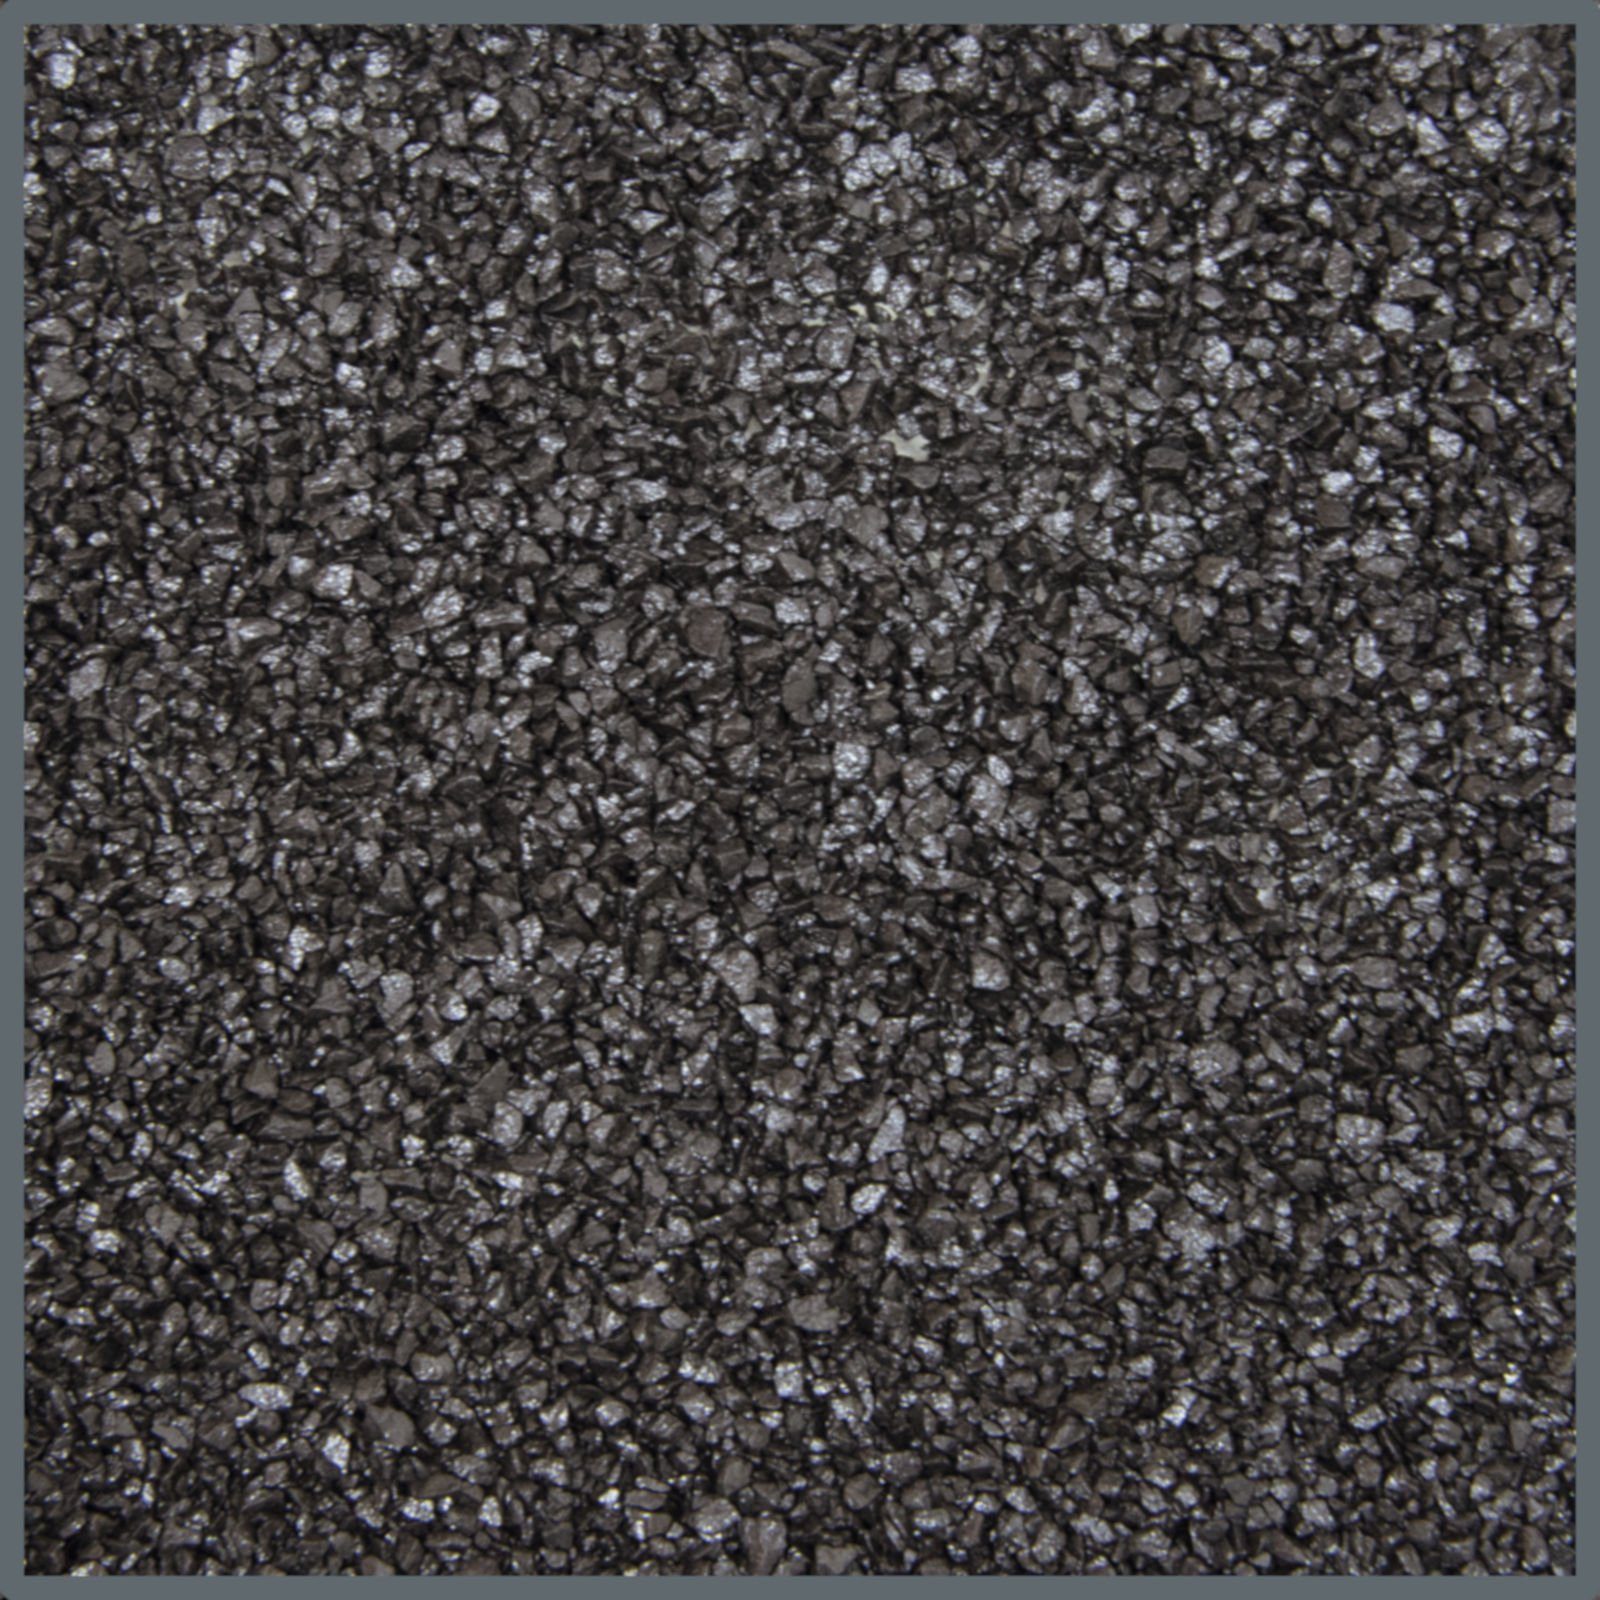 Dupla Aquarienkies Ground Colour, Black Star, 1-2 mm, 5 kg